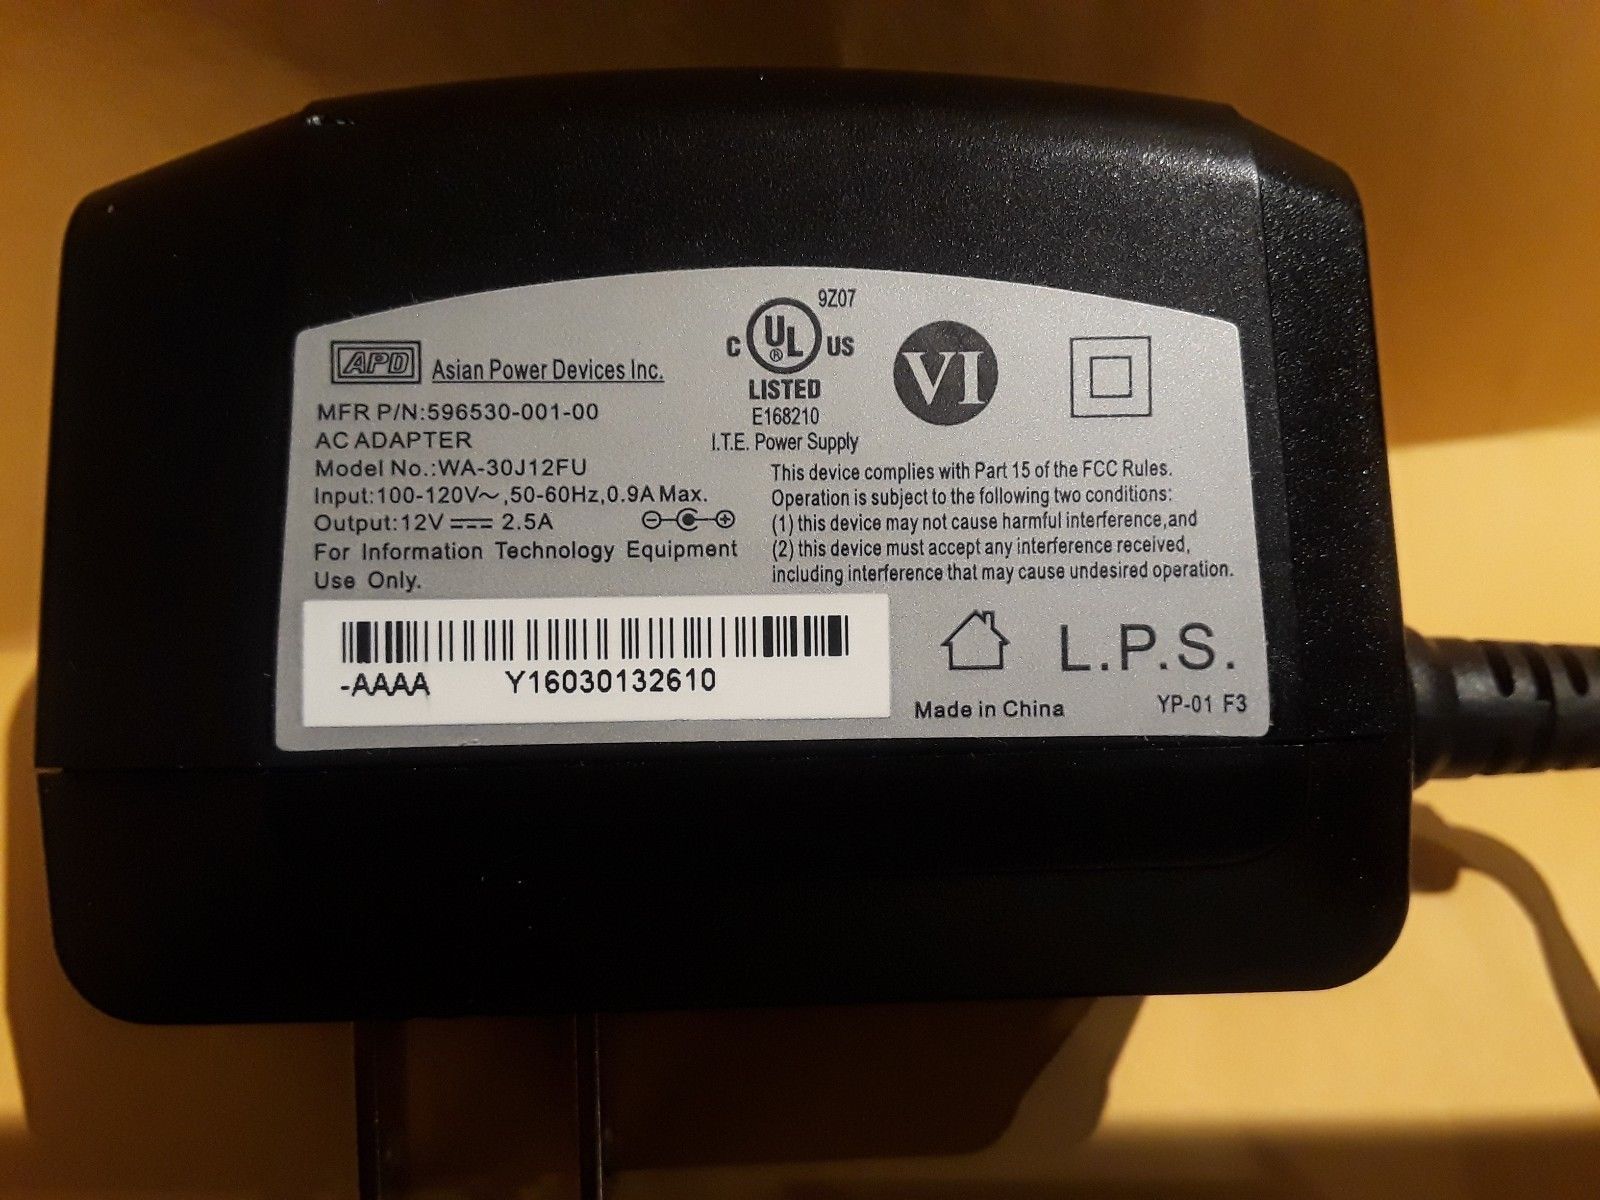 NEW 12V 2.5A APD WA-30J12FU 596530-001-00 AC Adapter for Netgear AC1750 AC1600 AC130 power supply - Click Image to Close